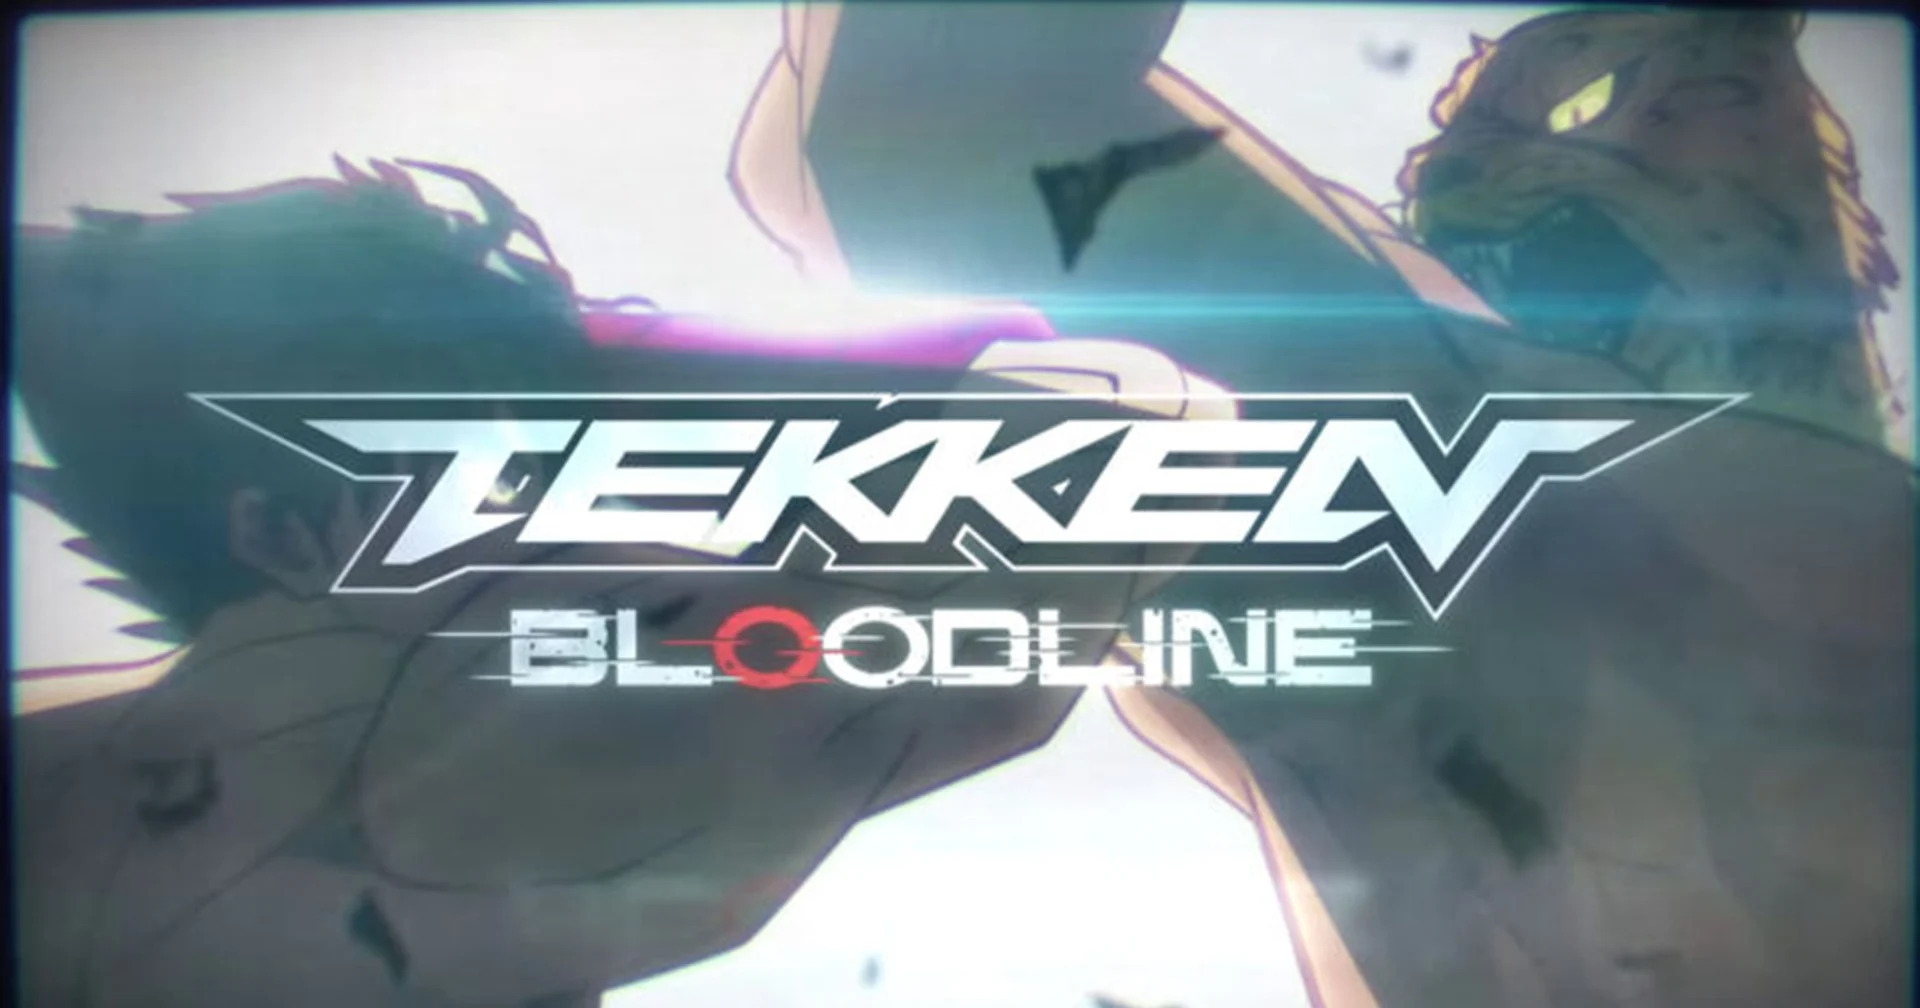 "Tekken: Bloodline" ซีรีส์อนิเมะดัดแปลงจากเกมต่อสู้ดัง พร้อมประกาศลง Netflix ภายในปีนี้